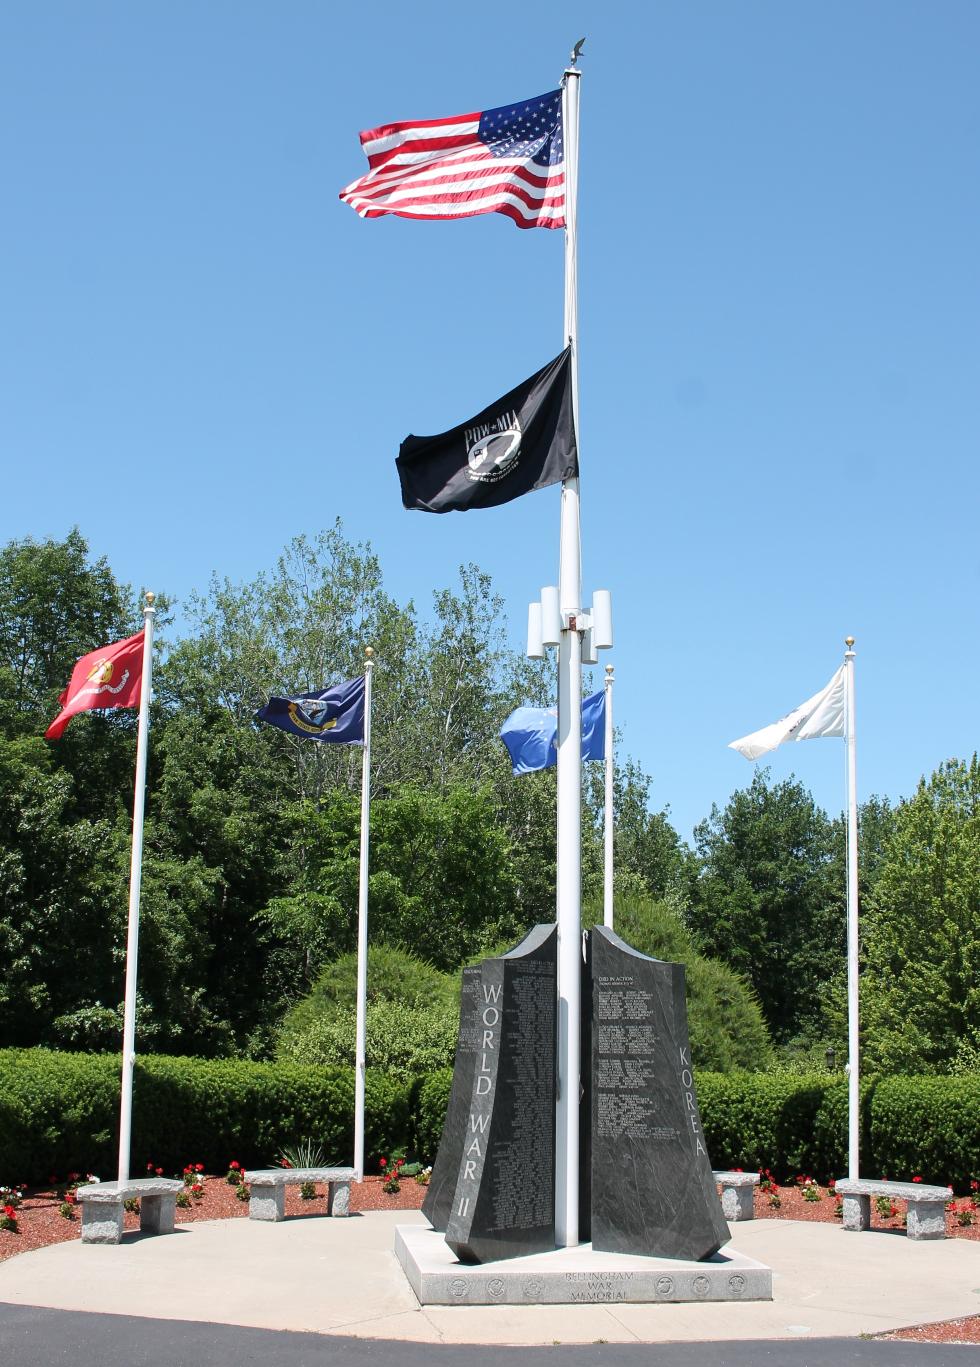 Bellingham Massachusetts World War I Korean War, Vietnam War & Desert Storm Veterans Memorial